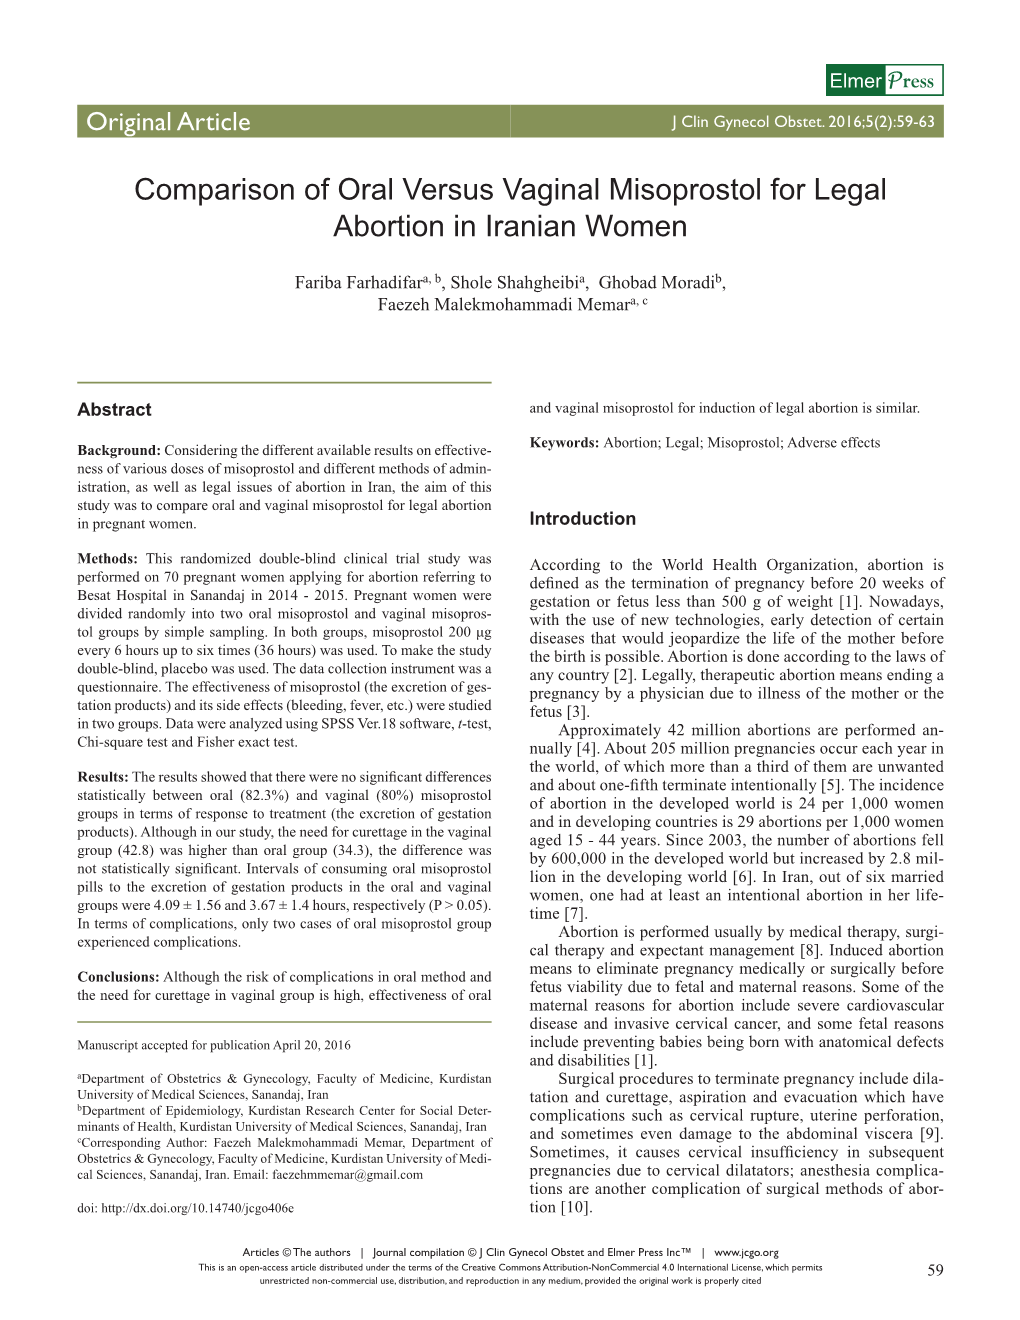 Comparison of Oral Versus Vaginal Misoprostol for Legal Abortion in Iranian Women